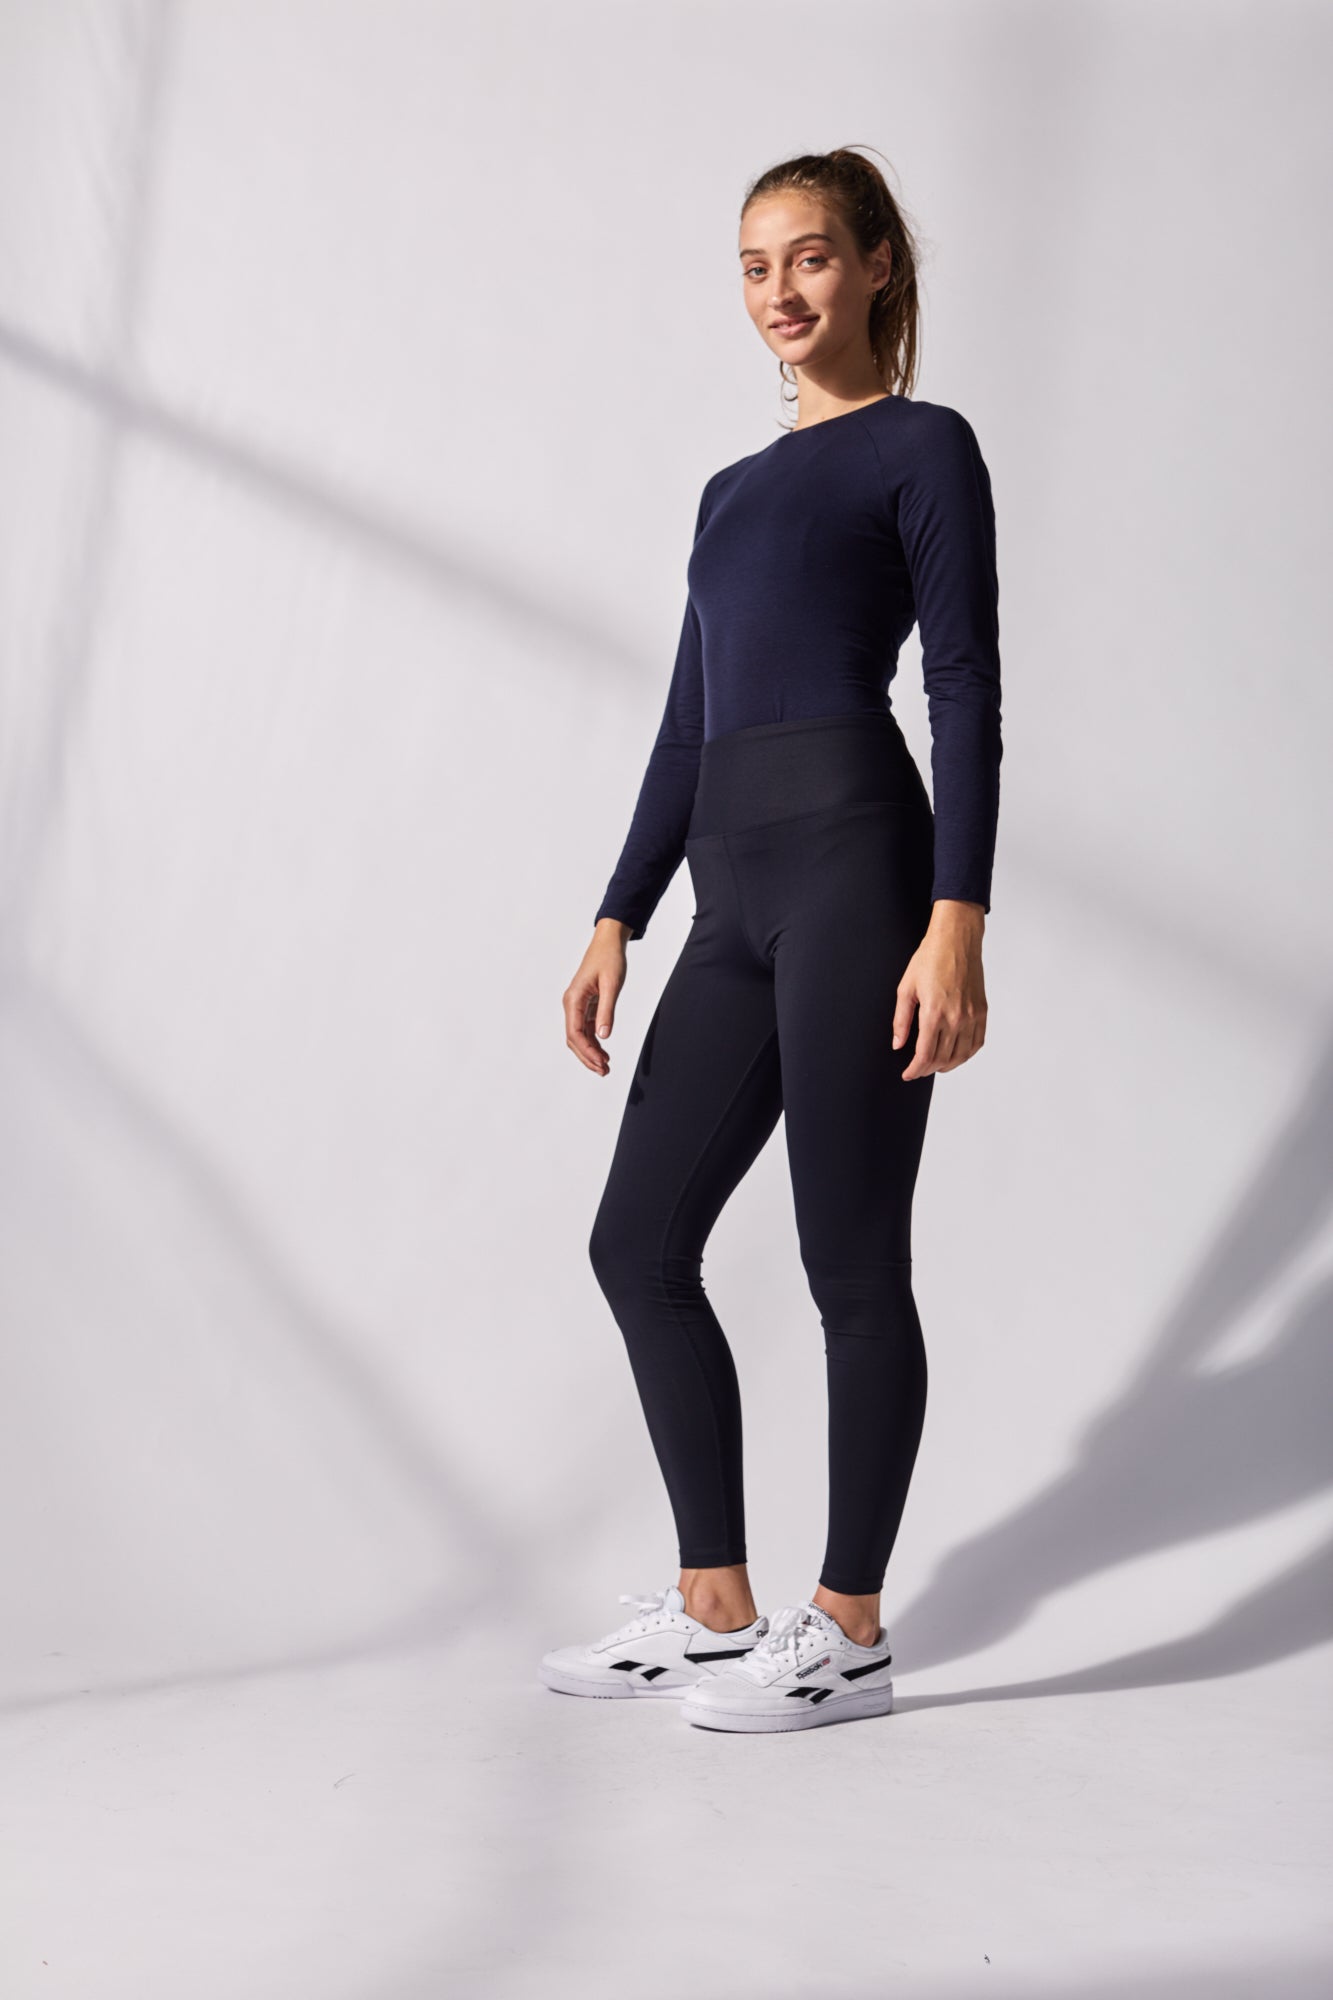 Merino Activewear top, long sleeved warm base layer made in Australia